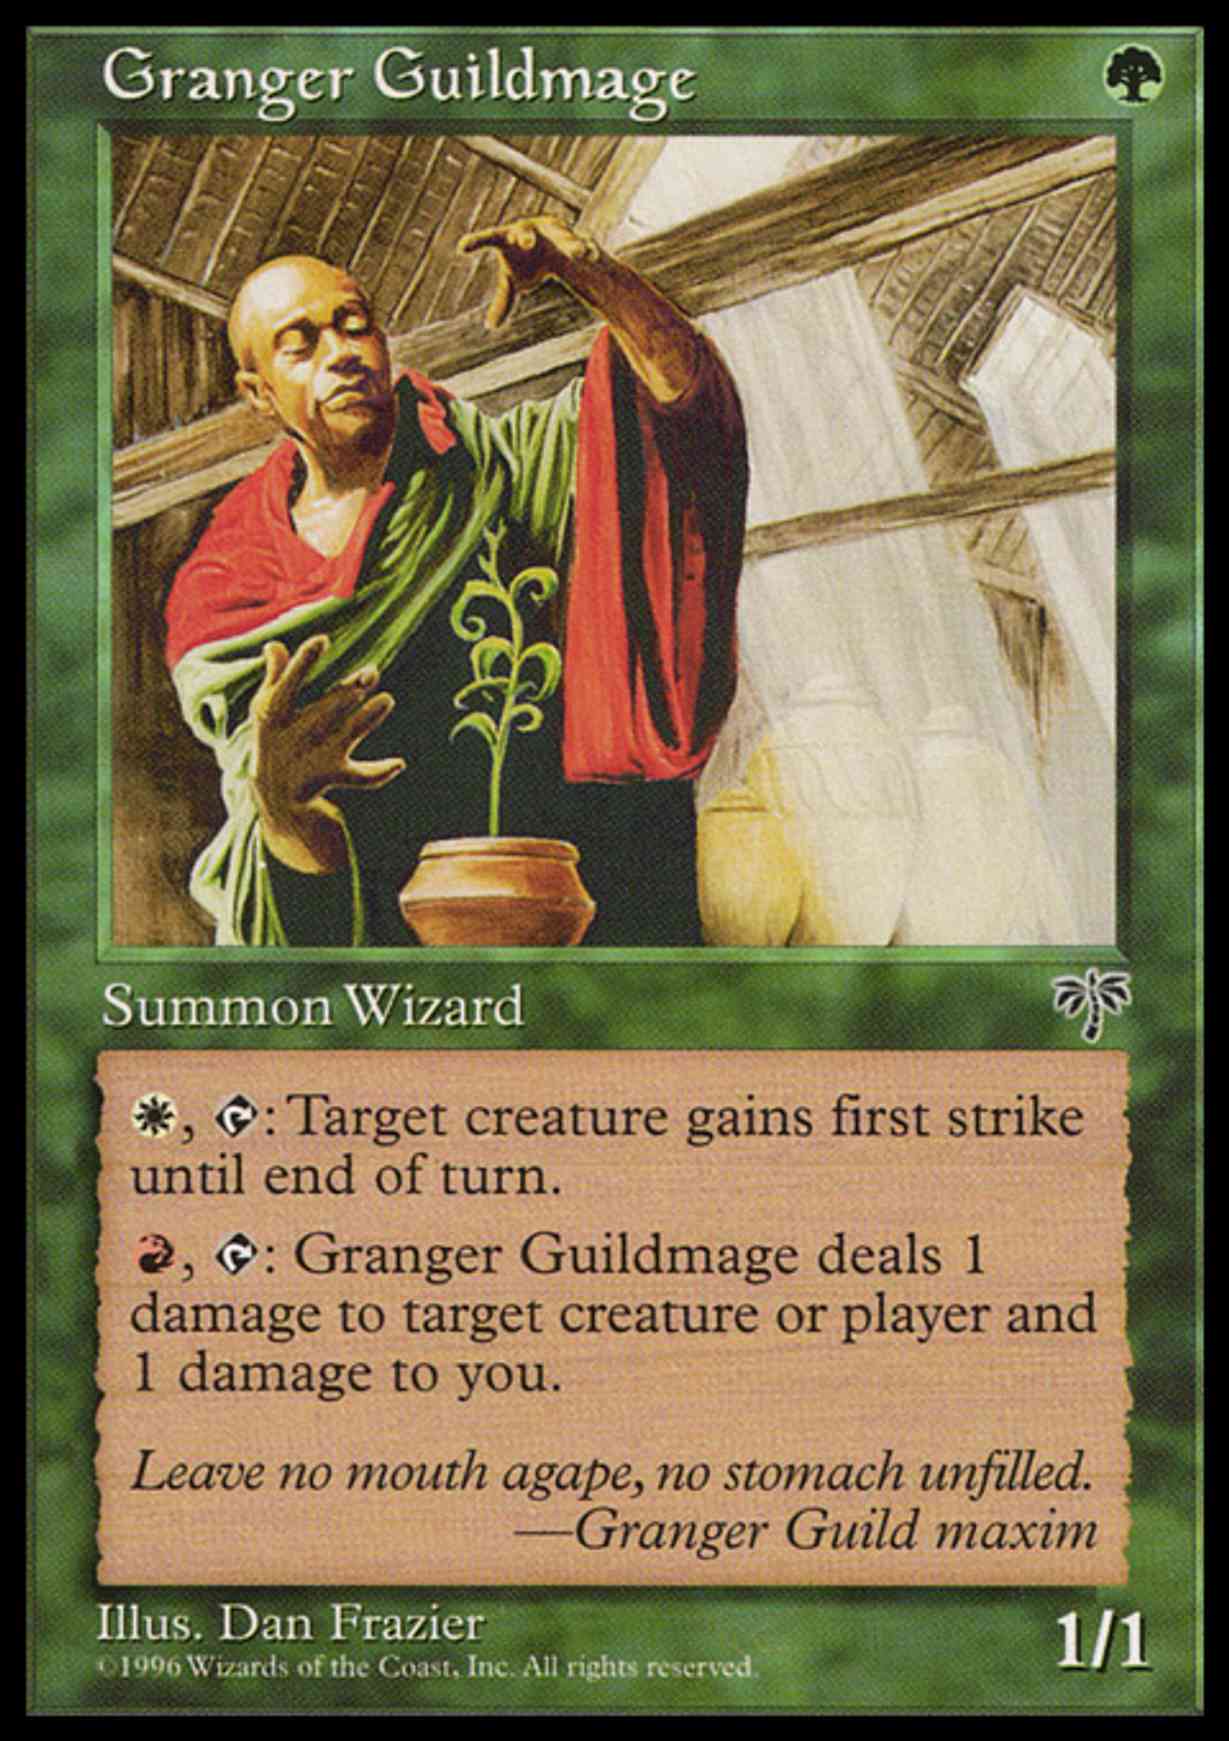 Granger Guildmage magic card front